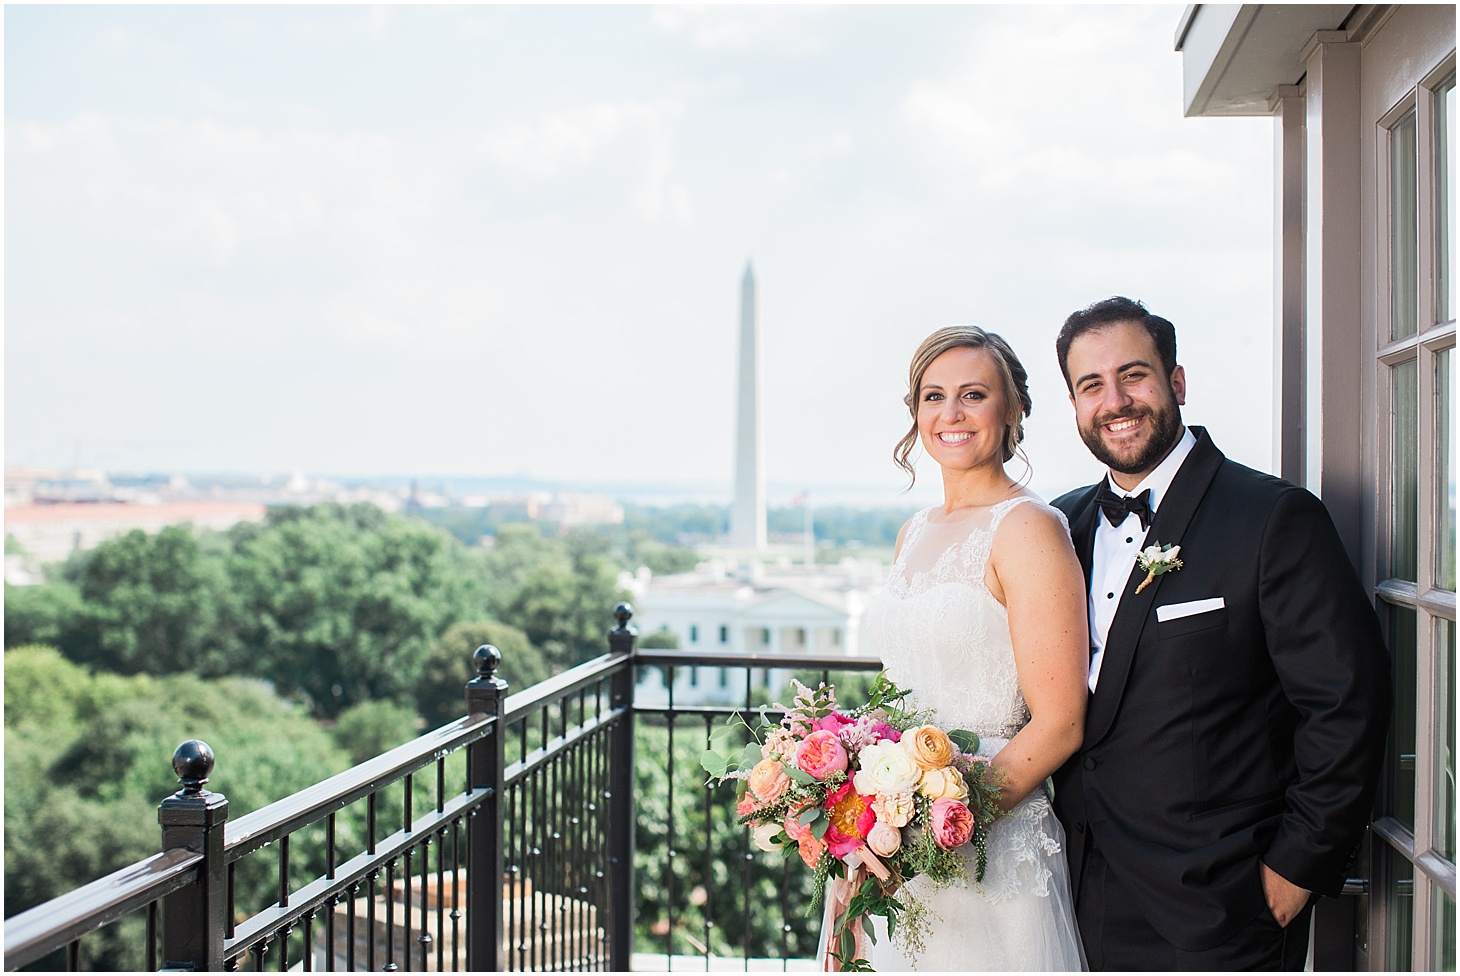 Wedding Portraits Overlooking the Washington Monument at the Hay-Adams Hotel | Interfaith DC Wedding by Sarah Bradshaw Photography